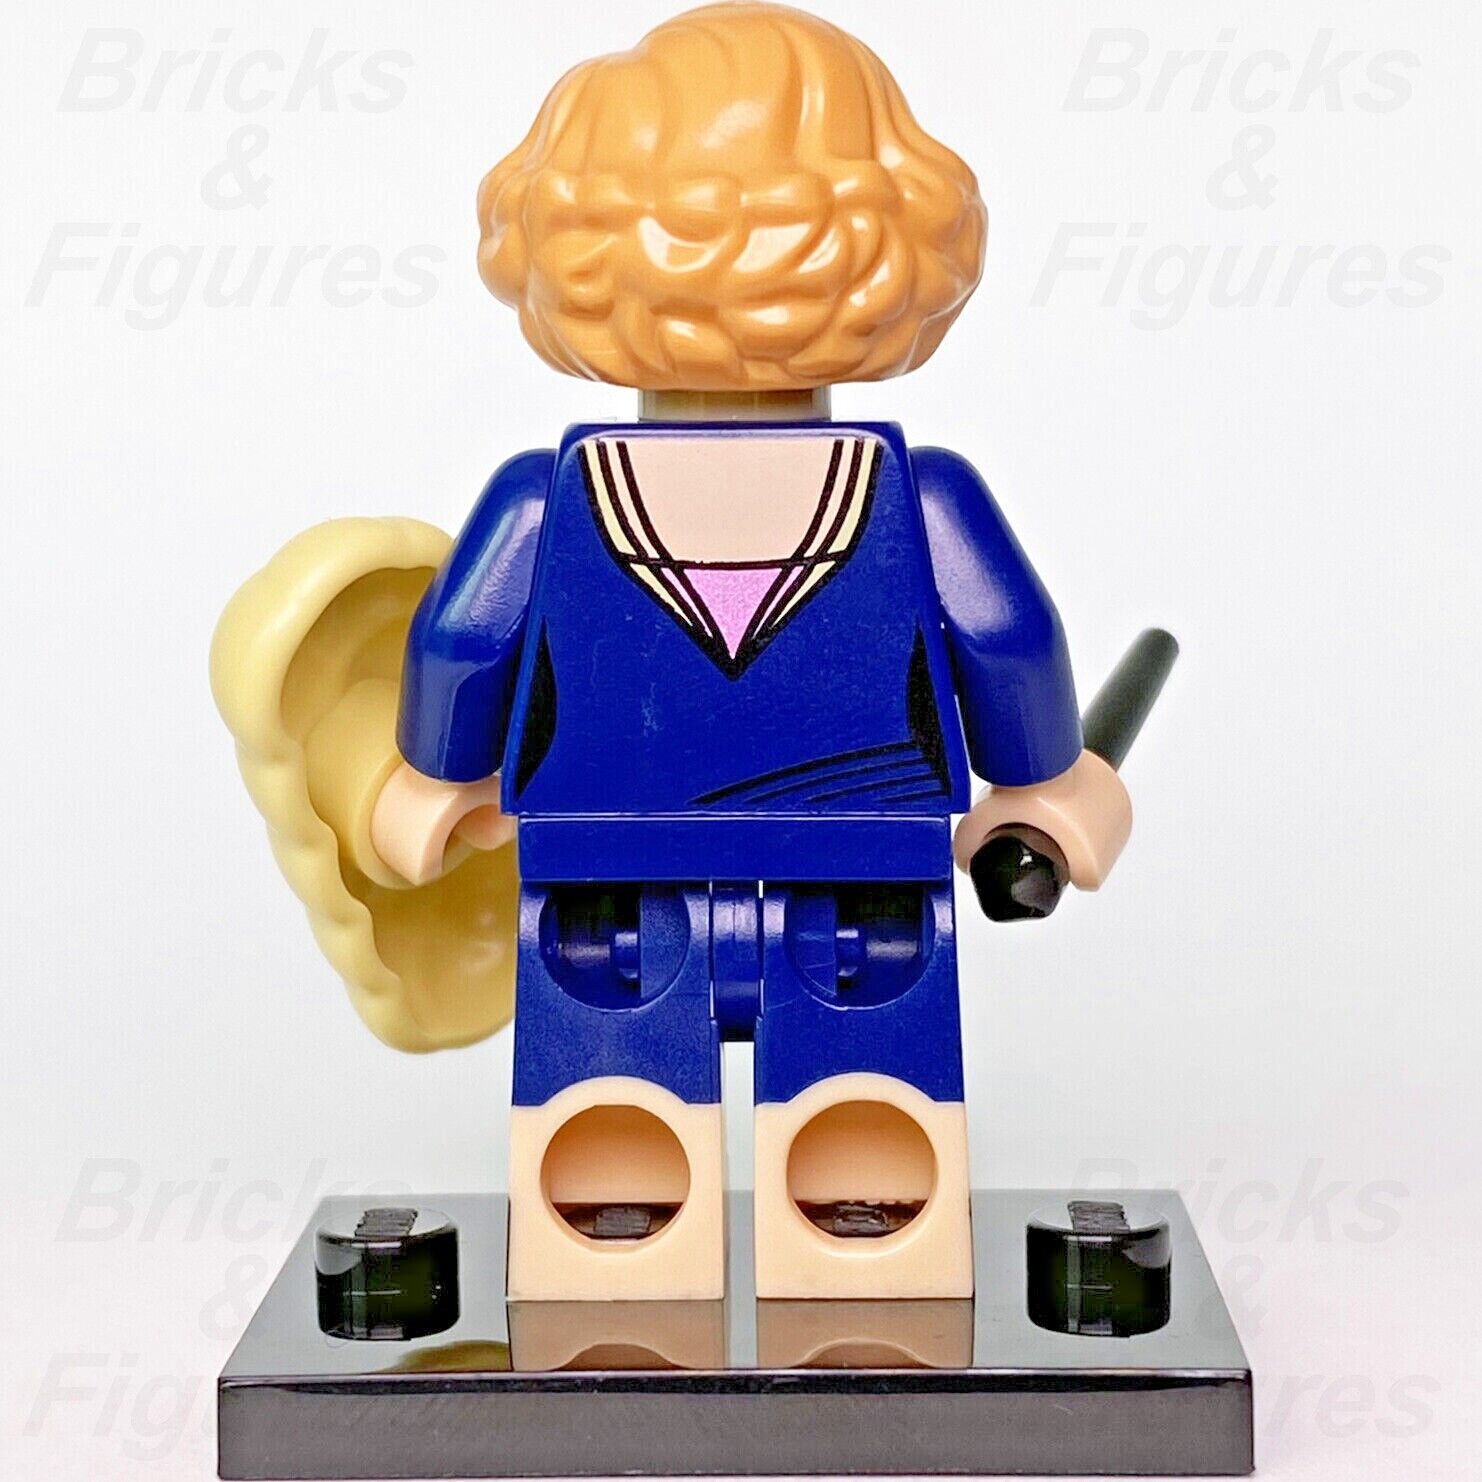 Harry Potter LEGO Queenie Goldstein Collectible Minifigures Series 1 71022 New - Bricks & Figures